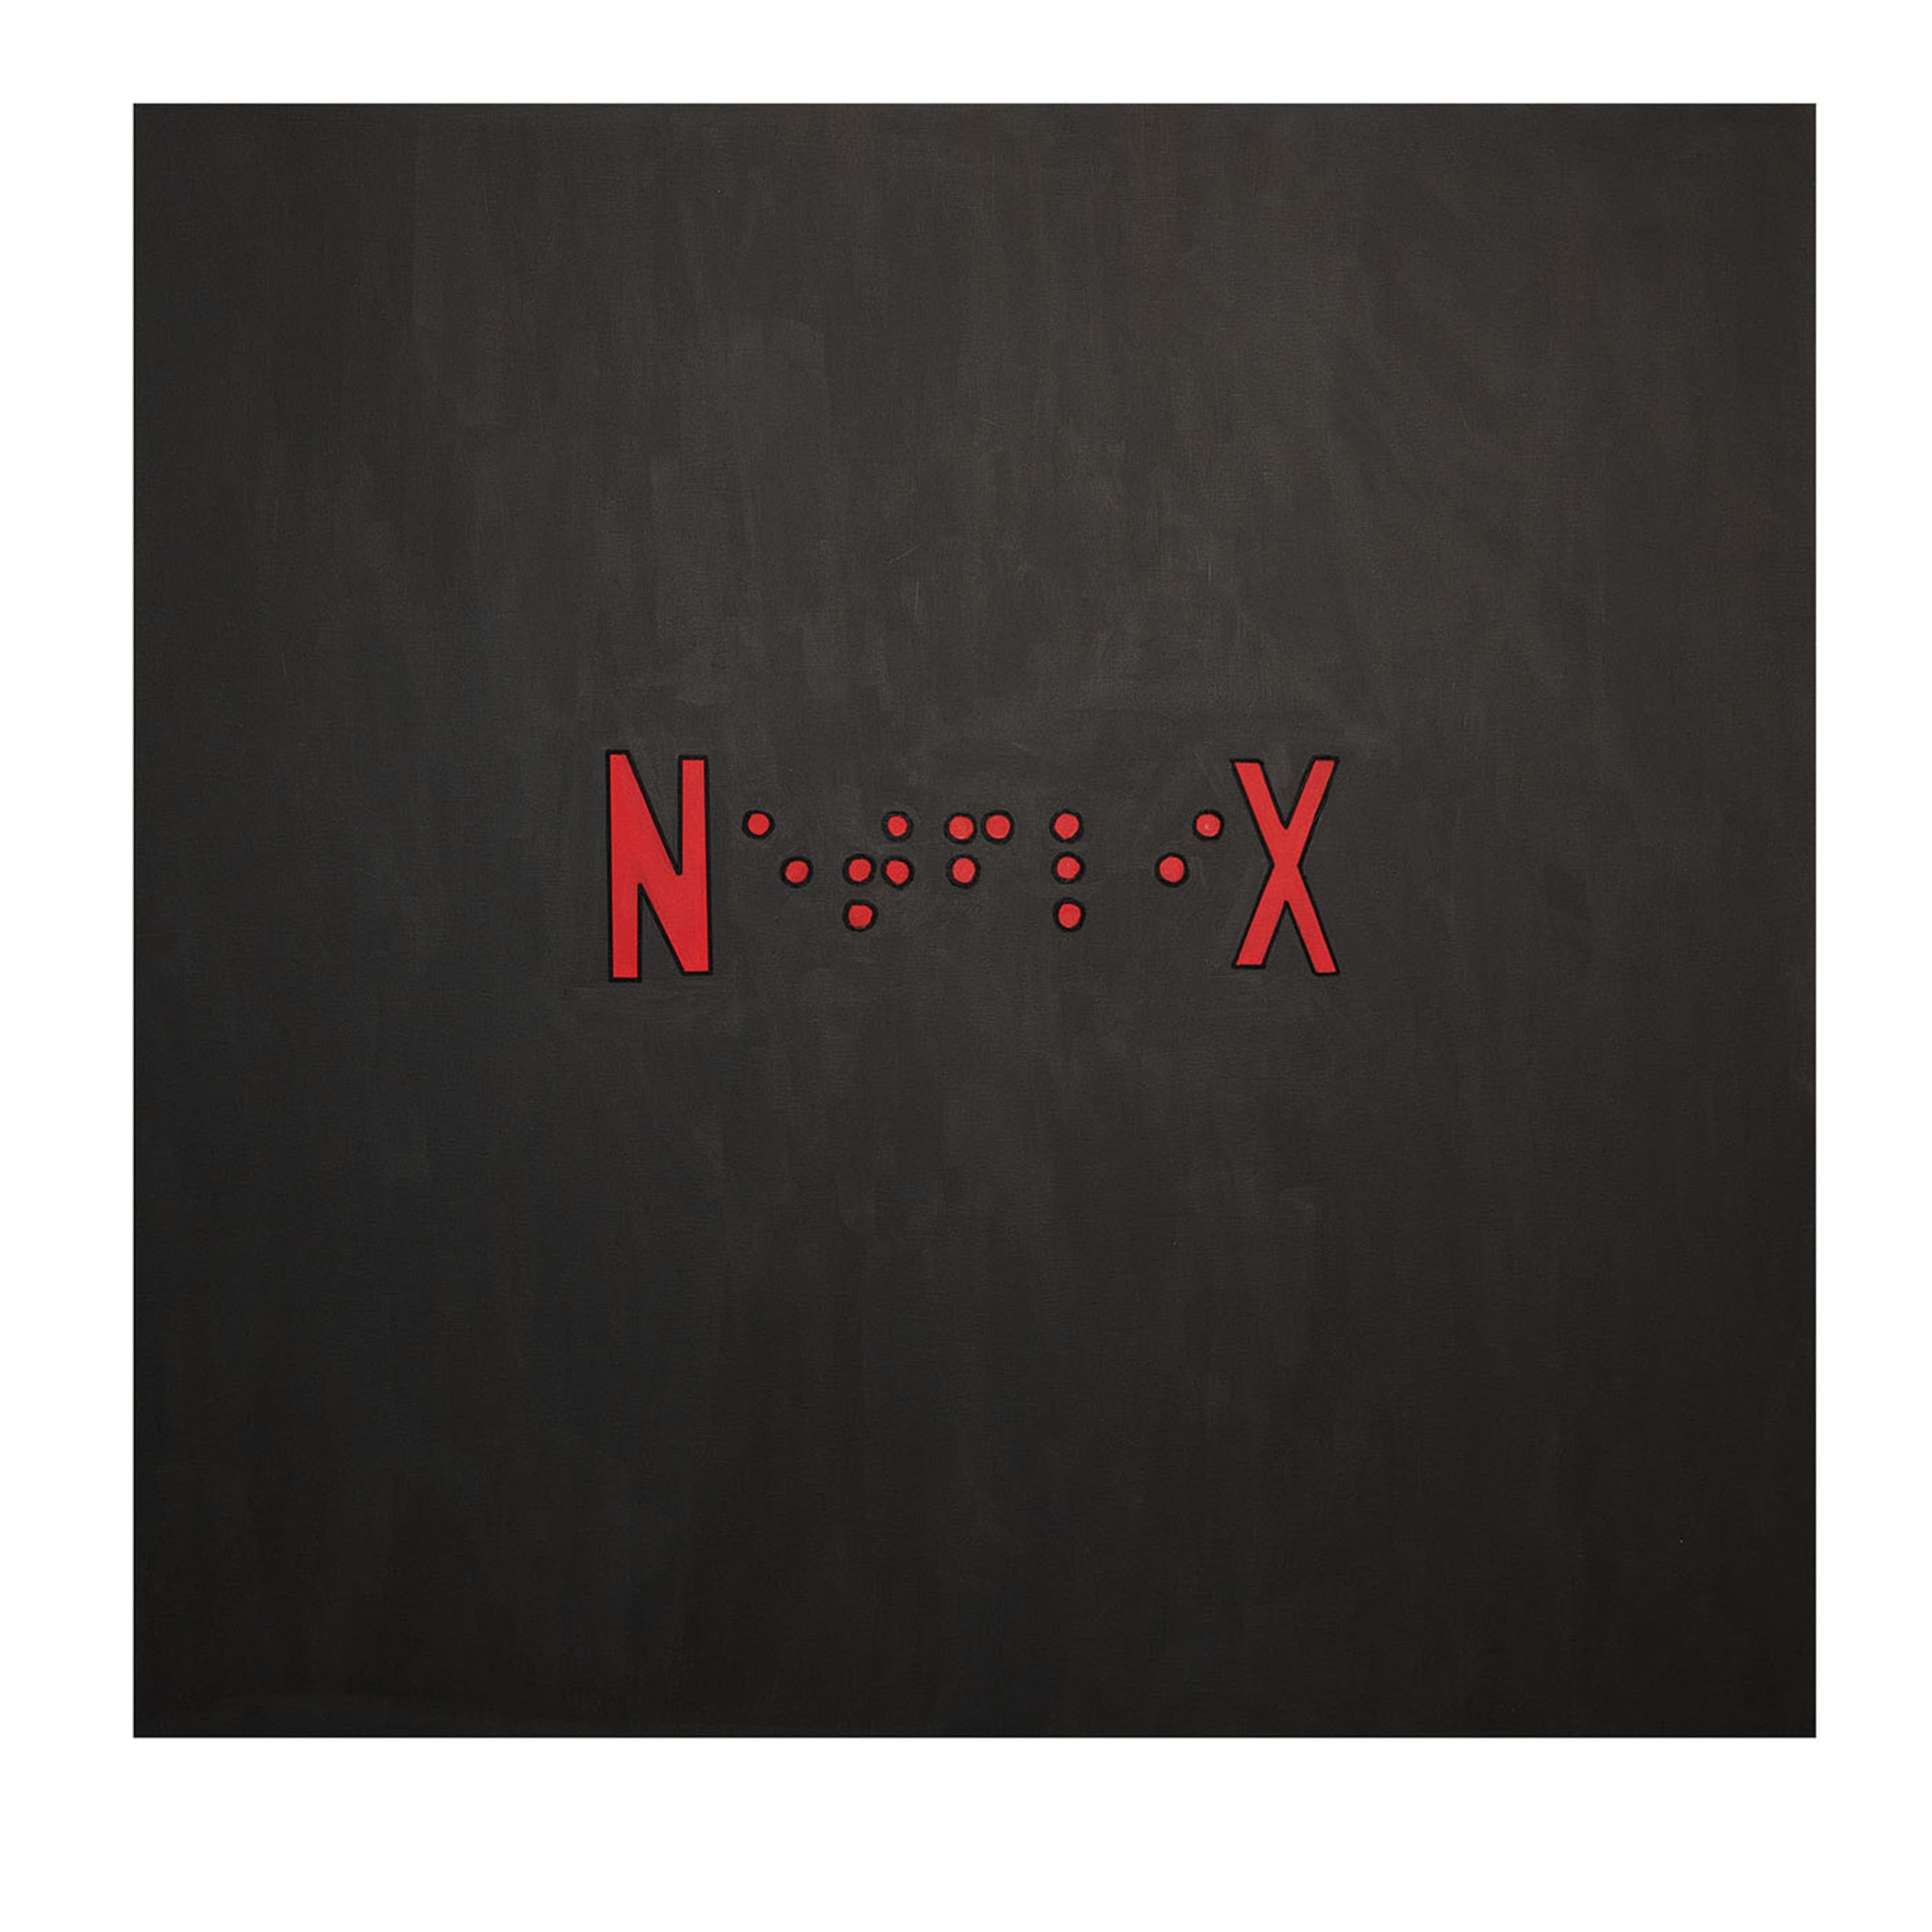  Netflix Painting - Main view